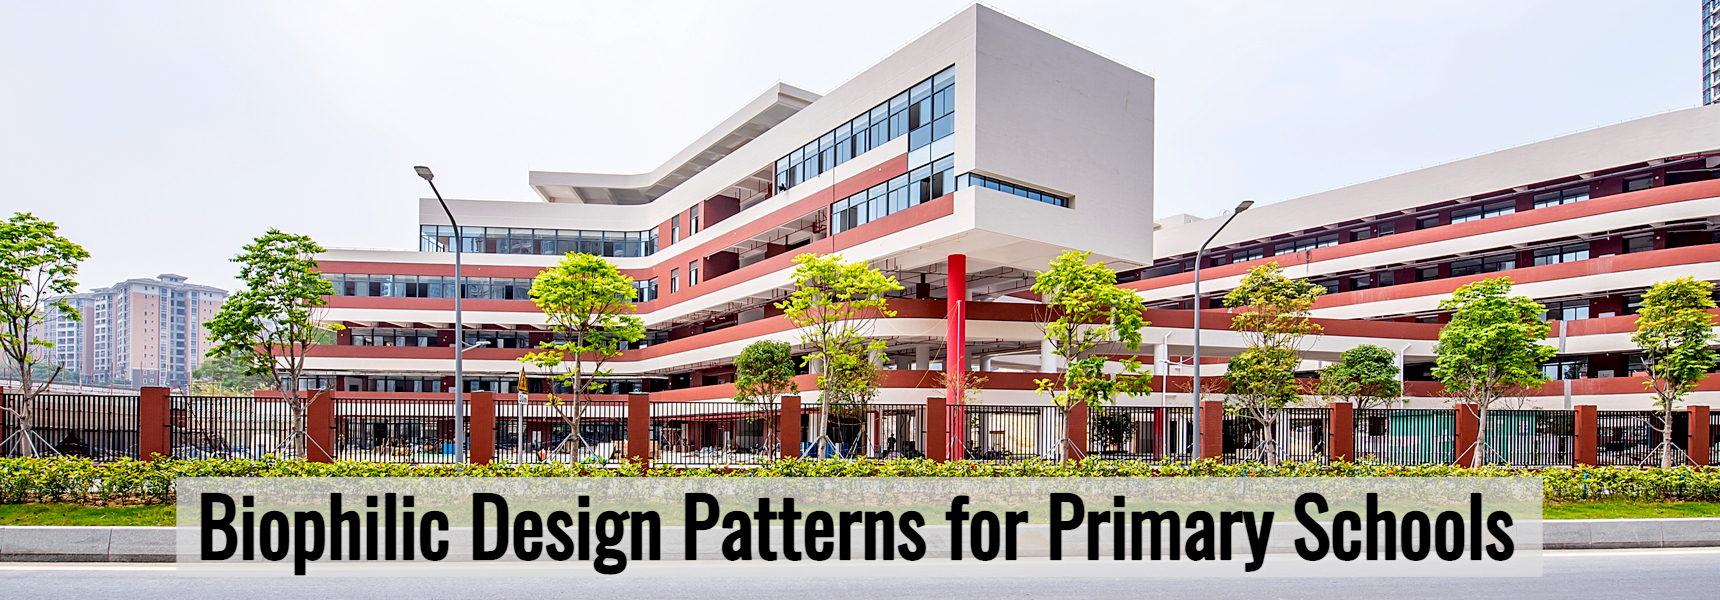 Biophilic Design Patterns for Primary Schools